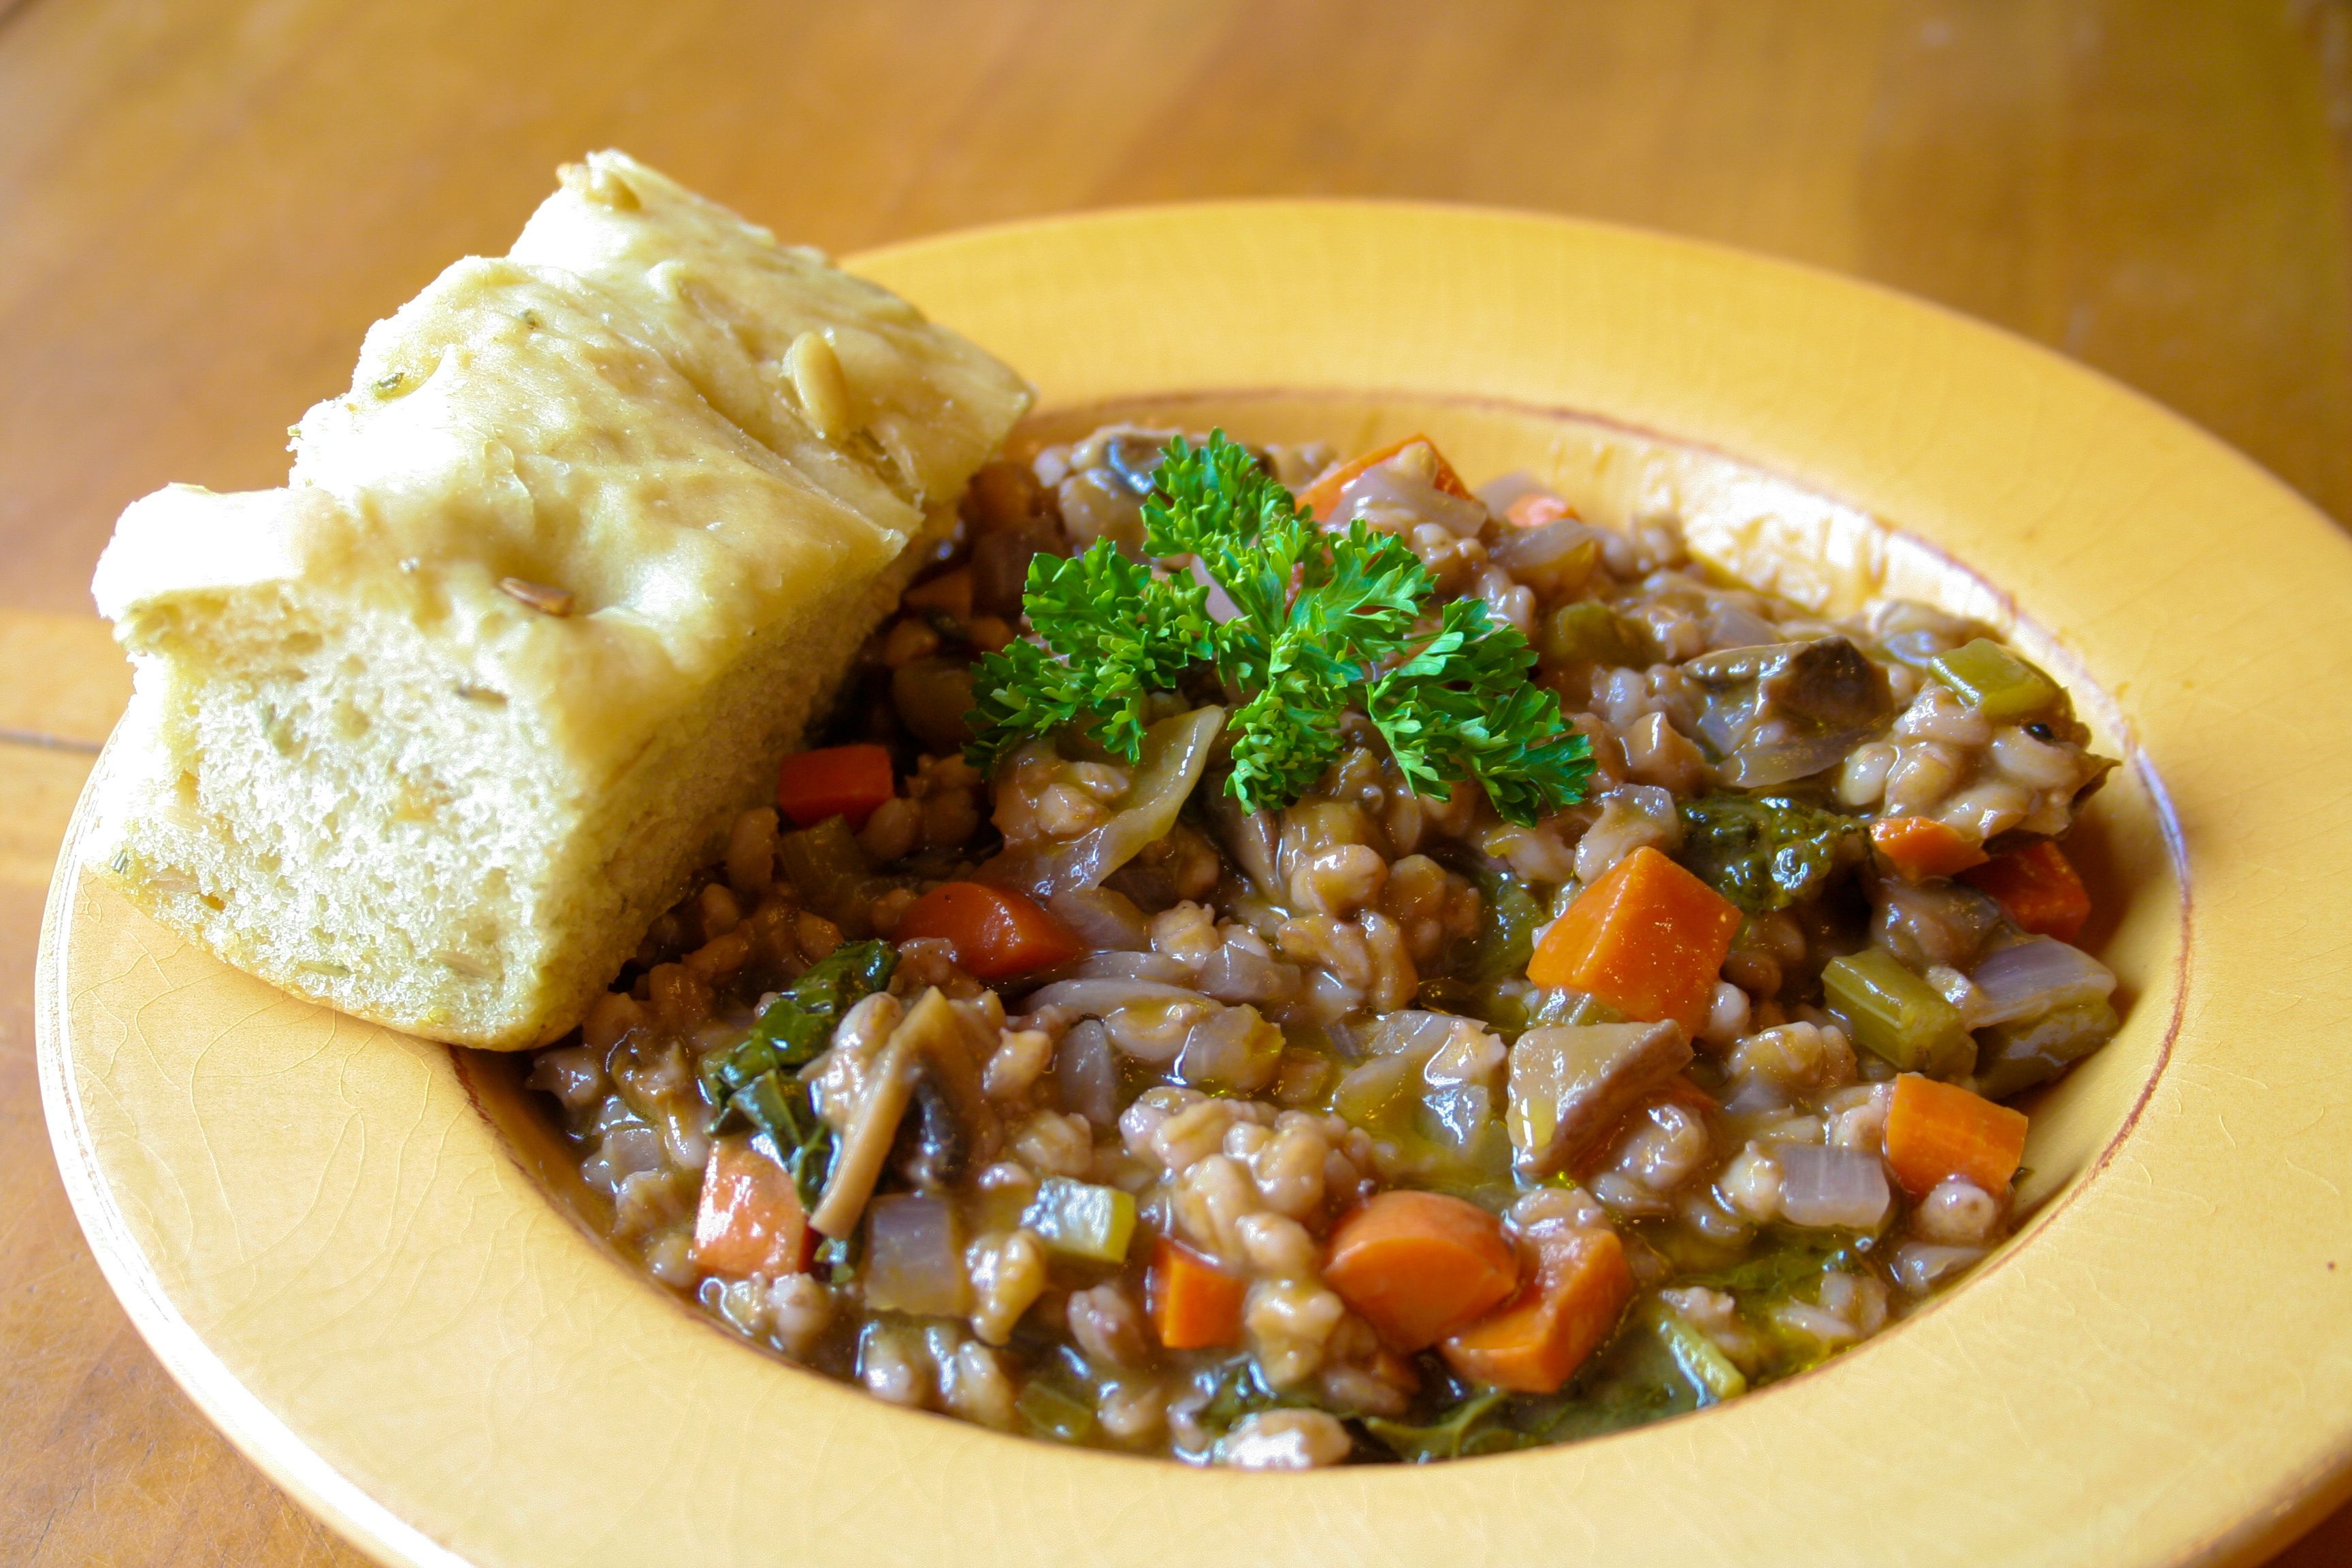 Mushroom Barley Soup - Comforting Deli-Style Soup Recipe